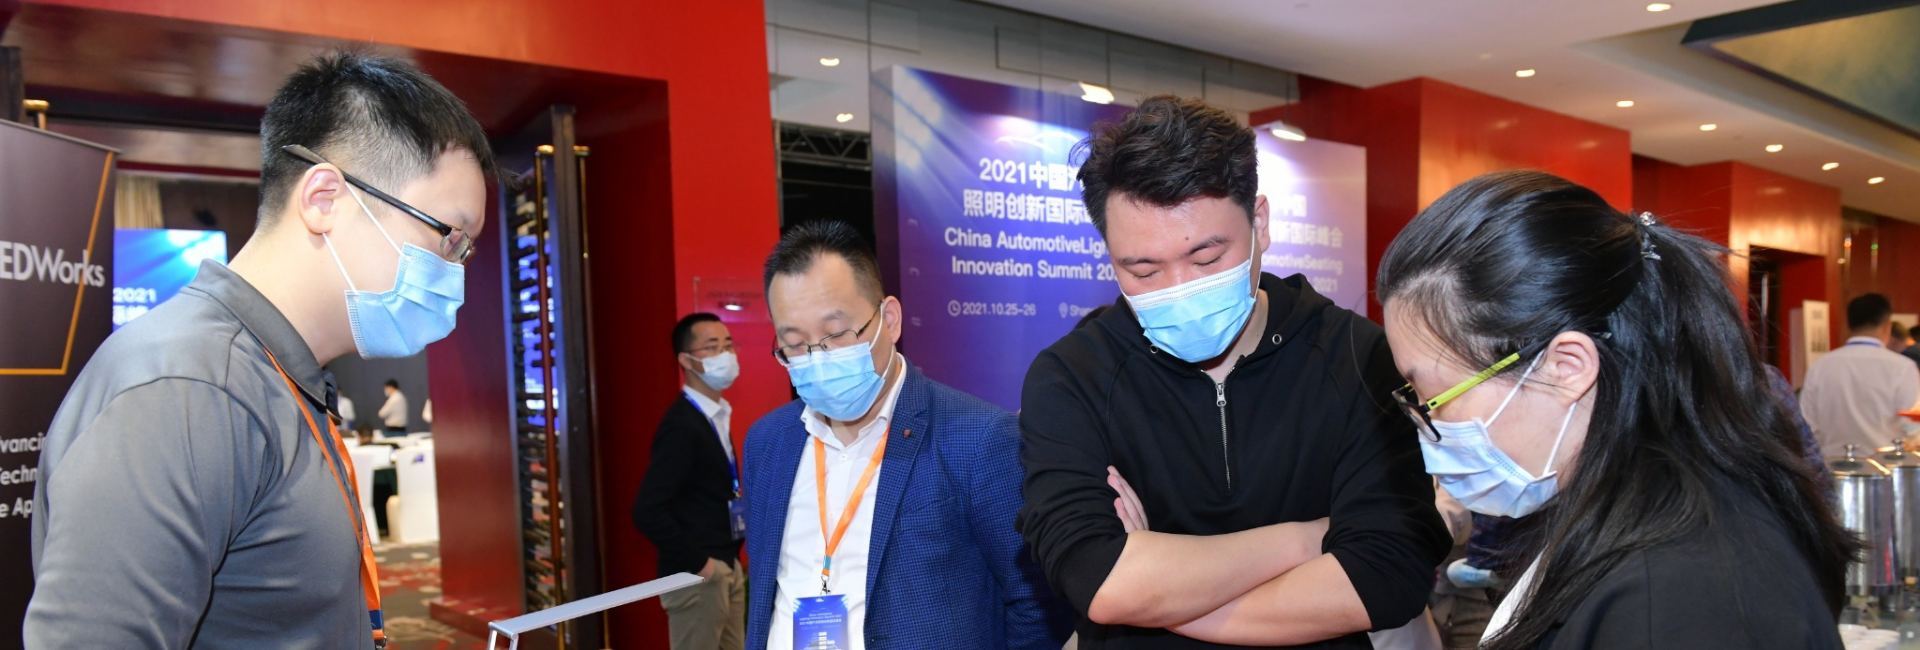 Attendees visit OLEDWorks booth at China Automotive Lighting Innovation Summit